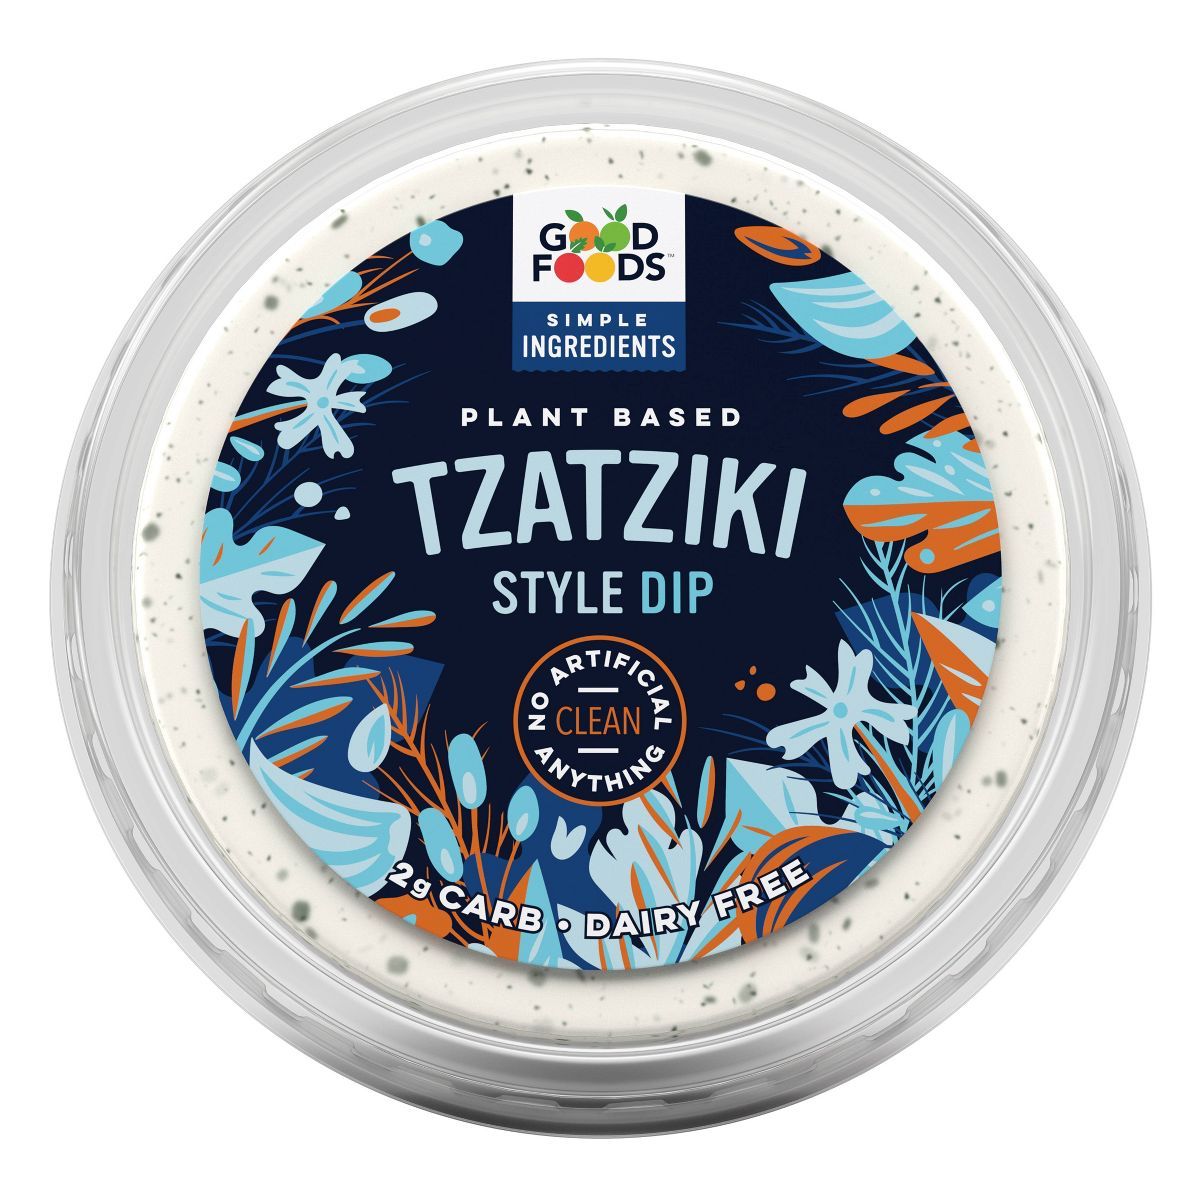 Good Foods Plant Based Tzatziki Style Dip - 8oz | Target